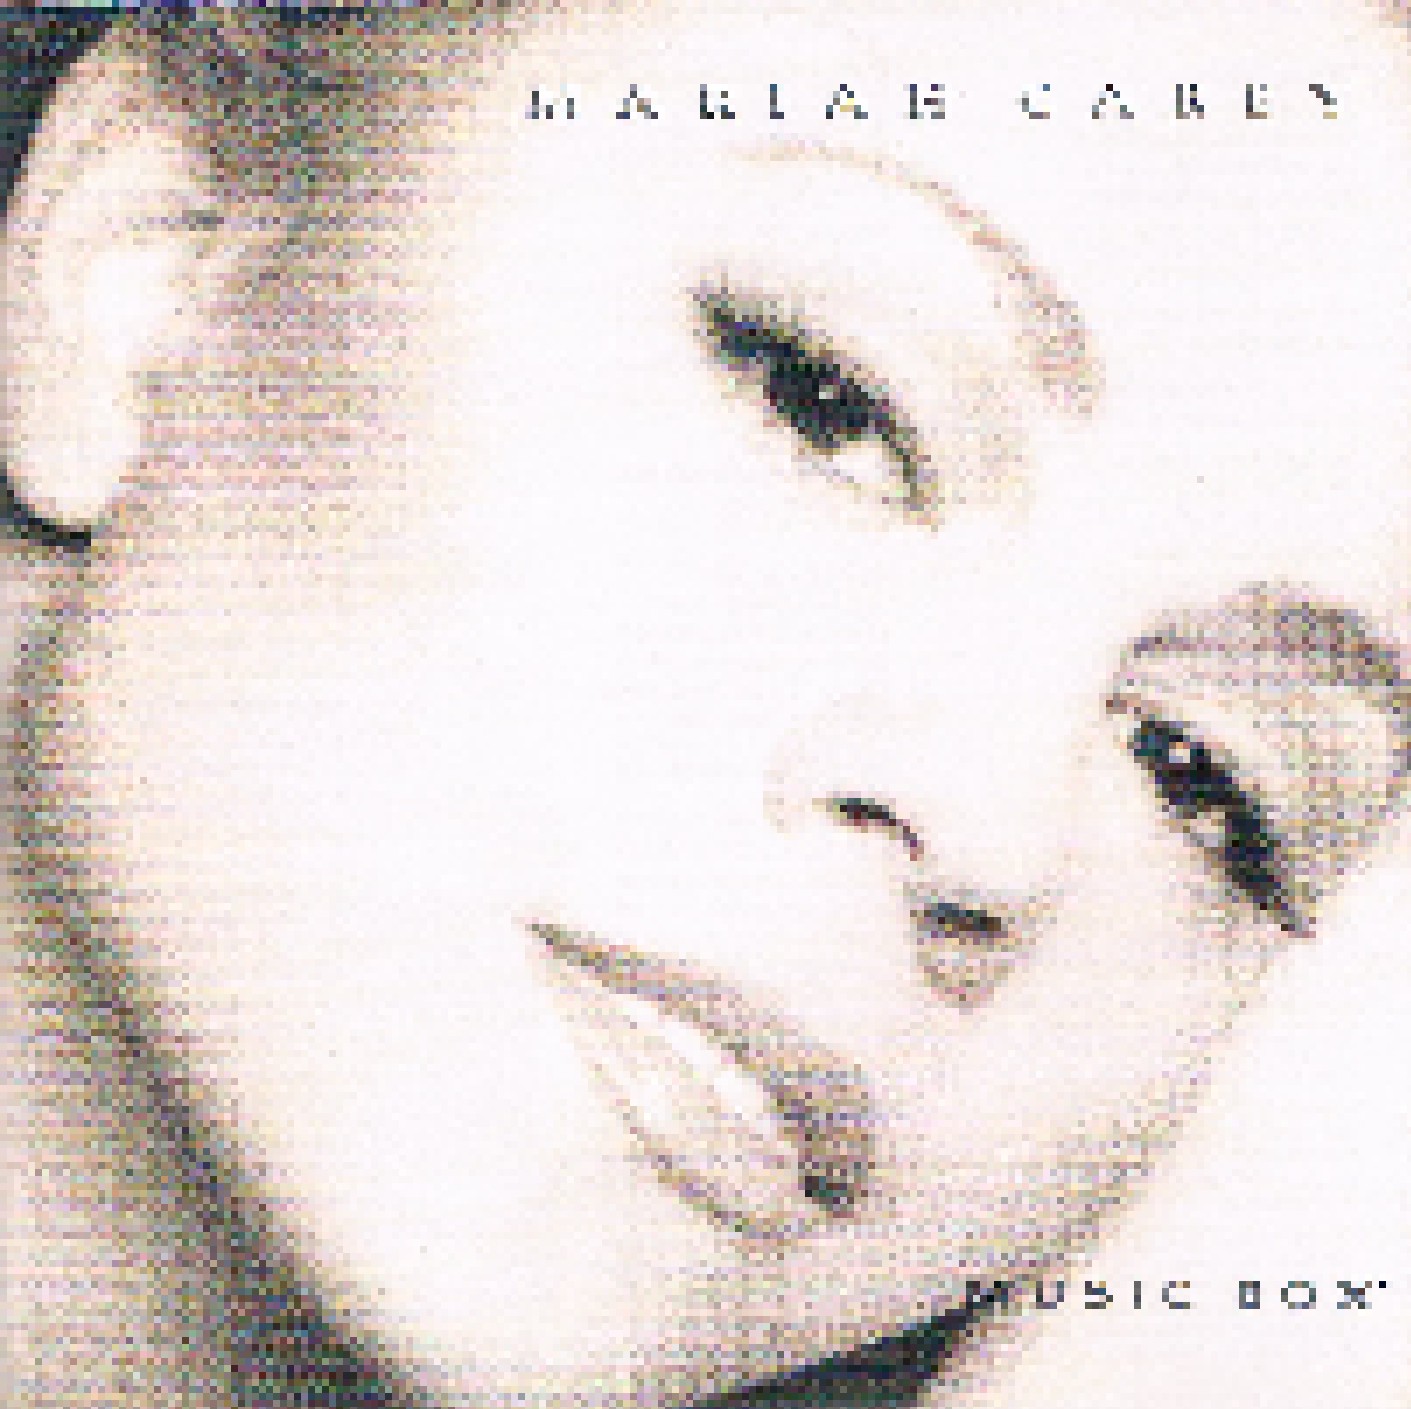 mariah carey music box